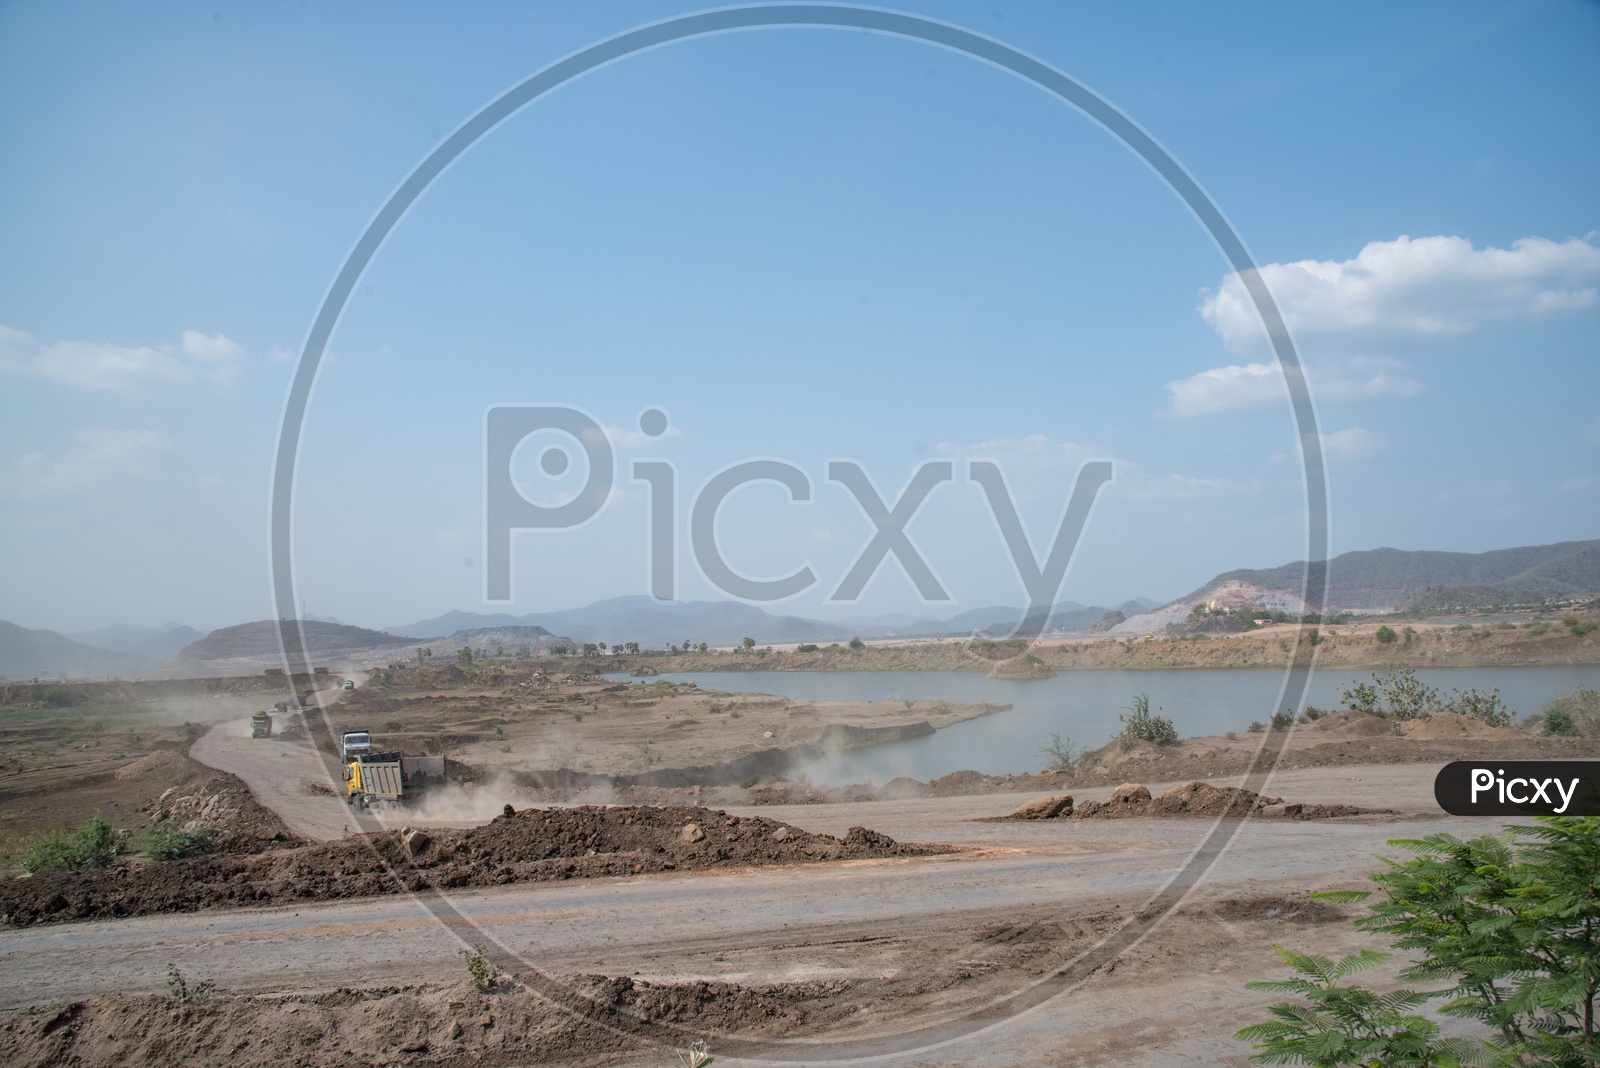 Polavaram Dam Project Construction Works..